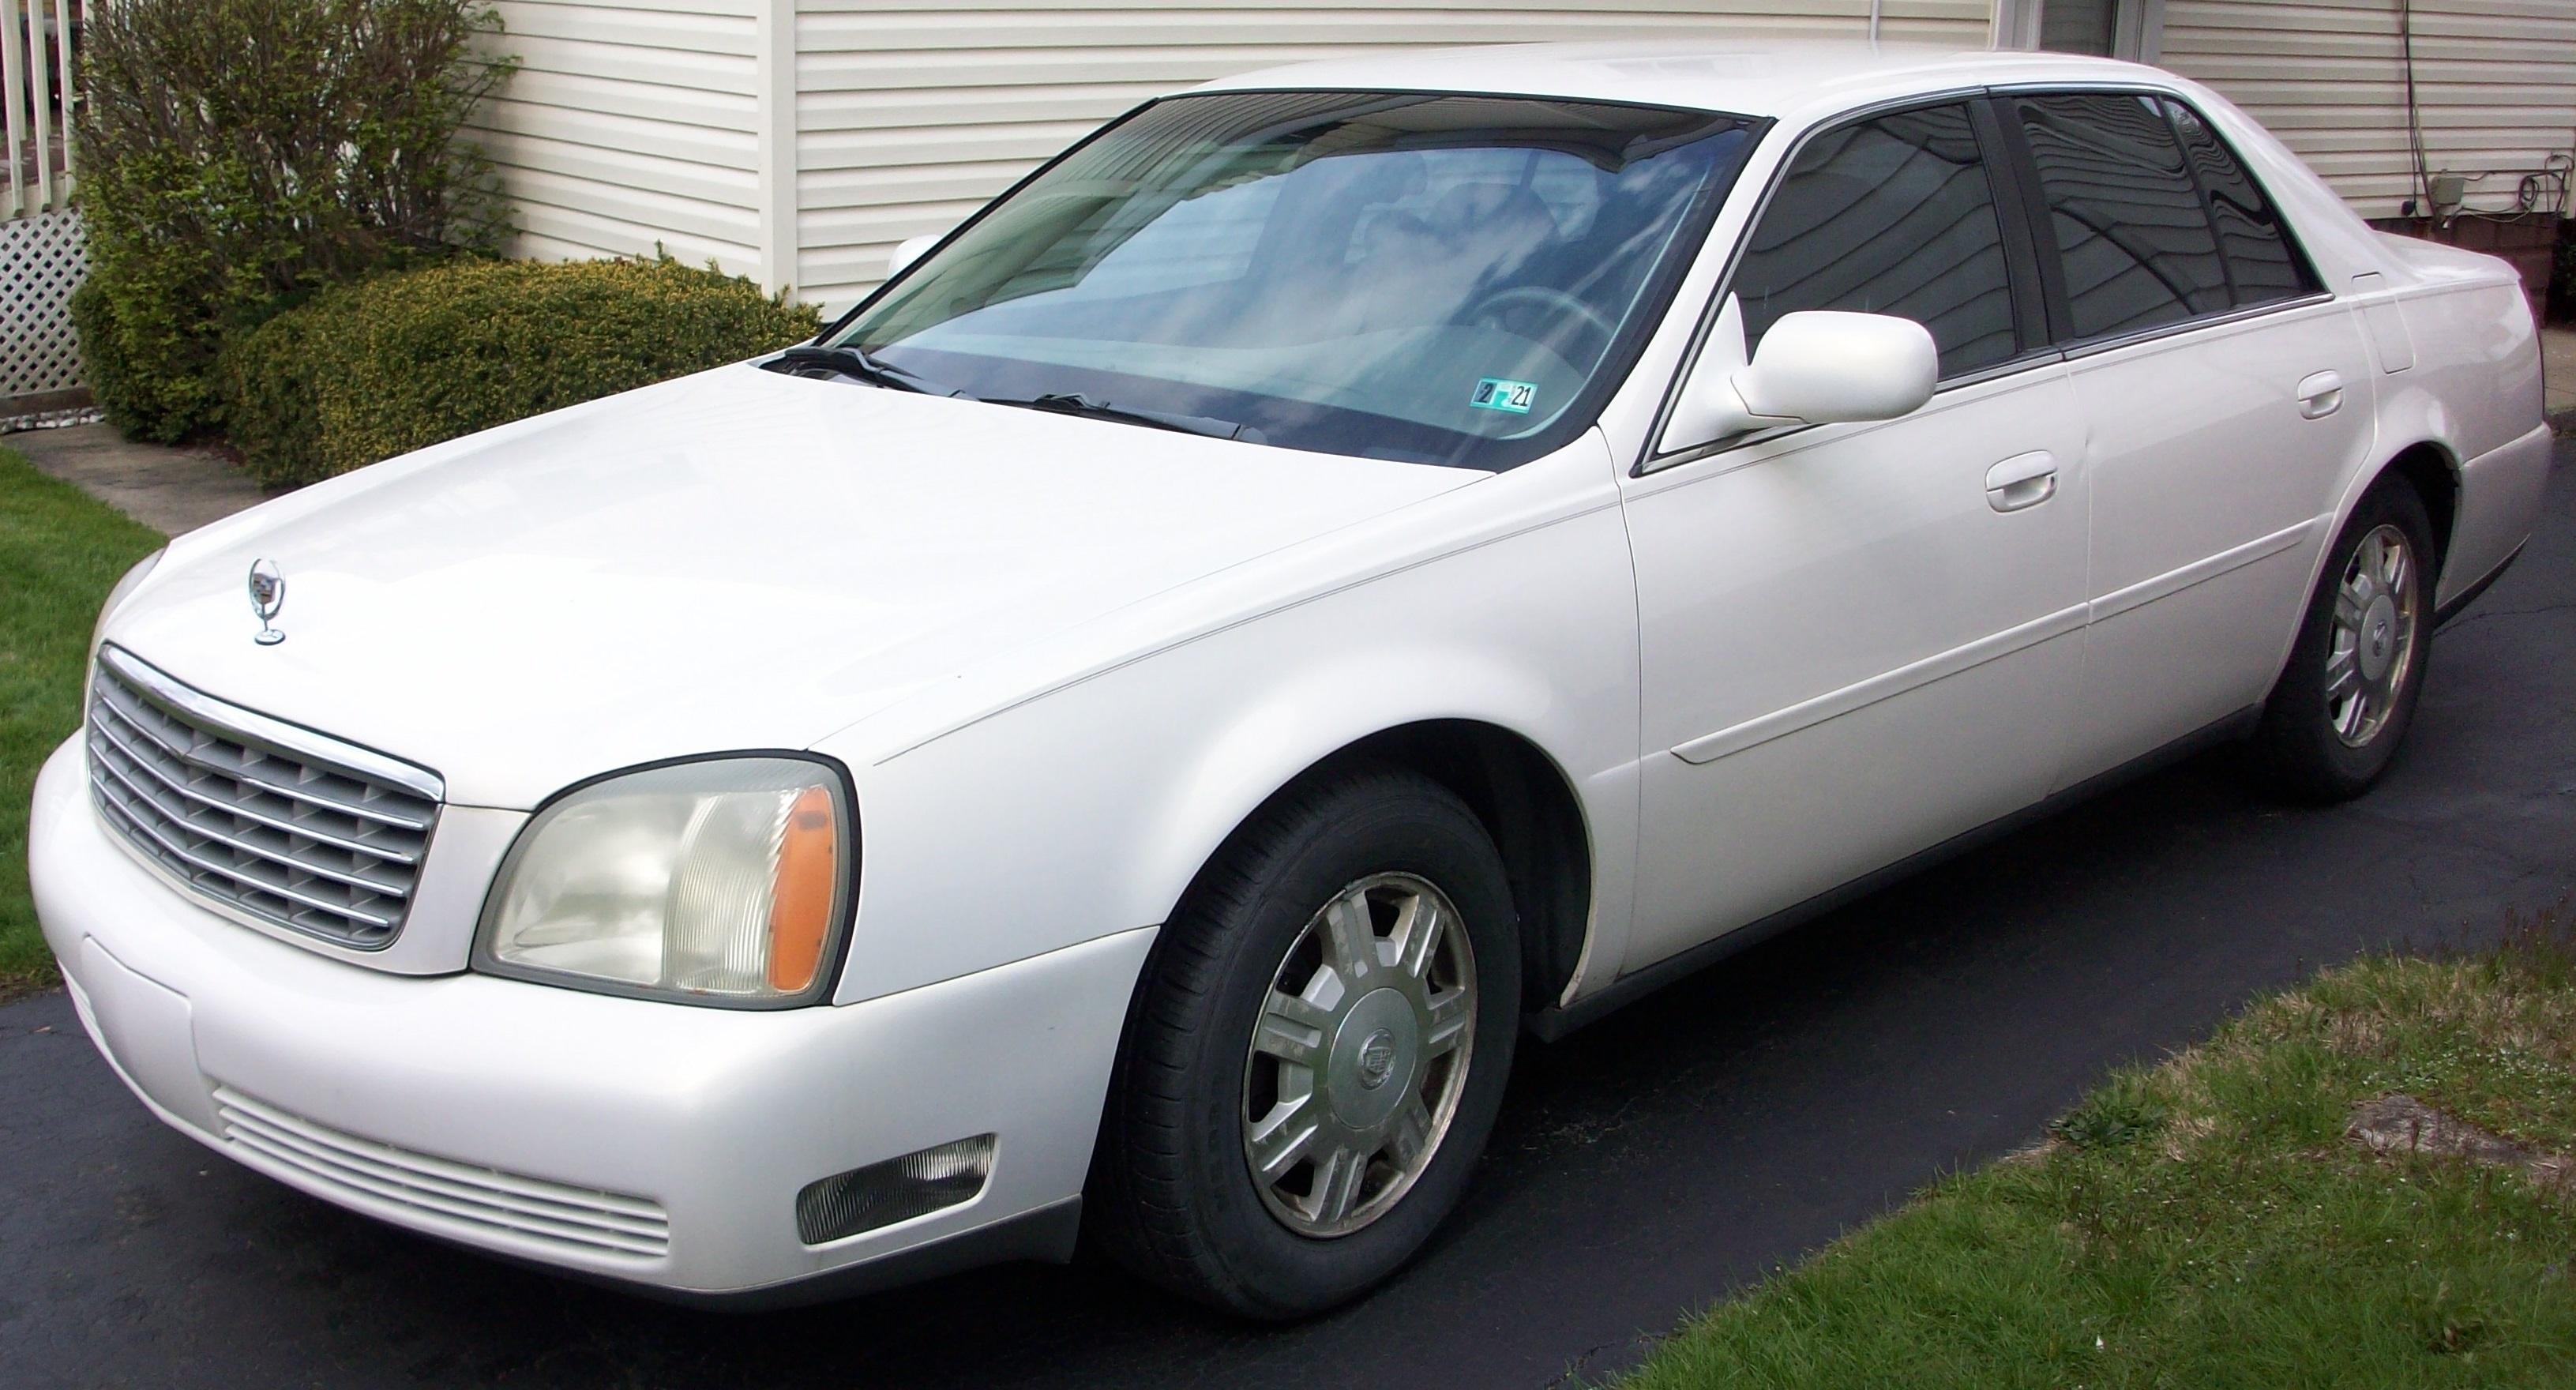 File:2004 Cadillac DeVille.jpg - Wikimedia Commons